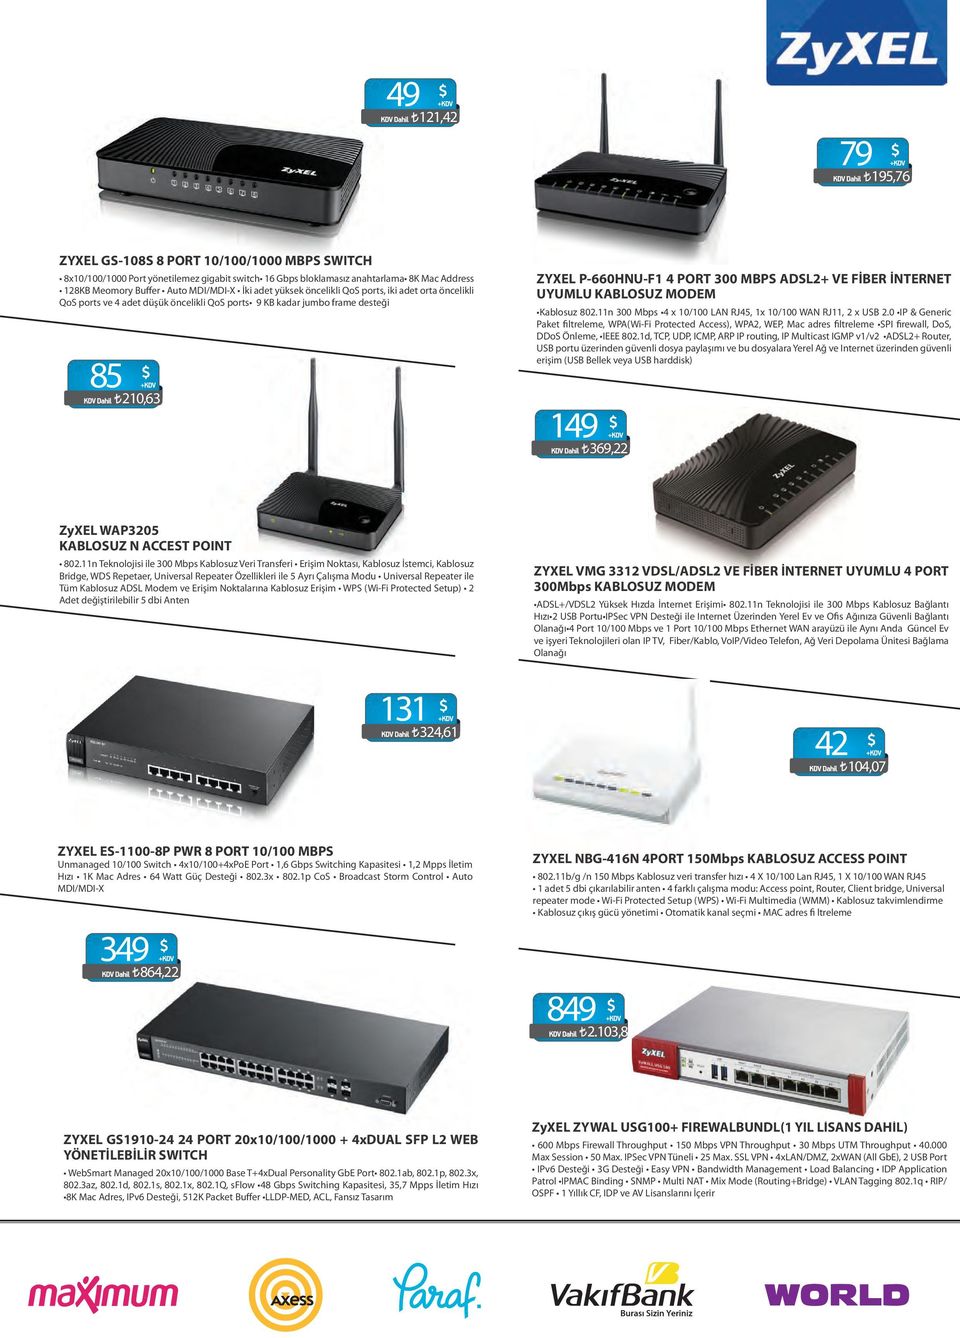 İNTERNET UYUMLU KABLOSUZ MODEM Kablosuz 802.11n 300 Mbps 4 x 10/100 LAN RJ45, 1x 10/100 WAN RJ11, 2 x USB 2.